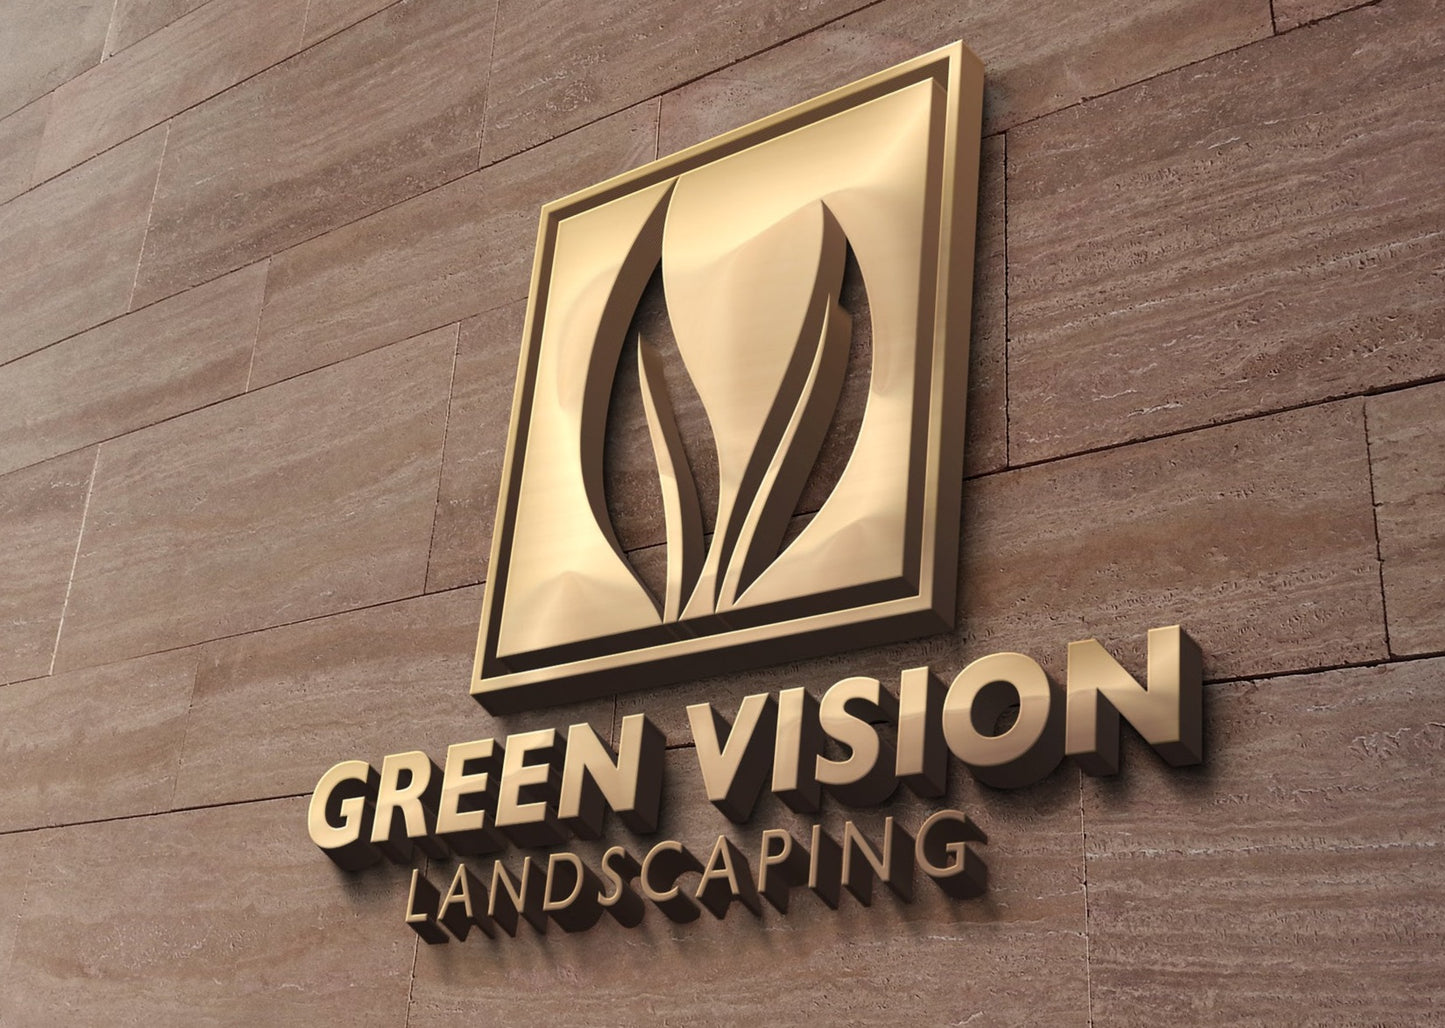 Logo Design | Landscaping Business | Lawn Care Business | Company | Landscape Design | Landscaper | Yard Care | Professional Logo